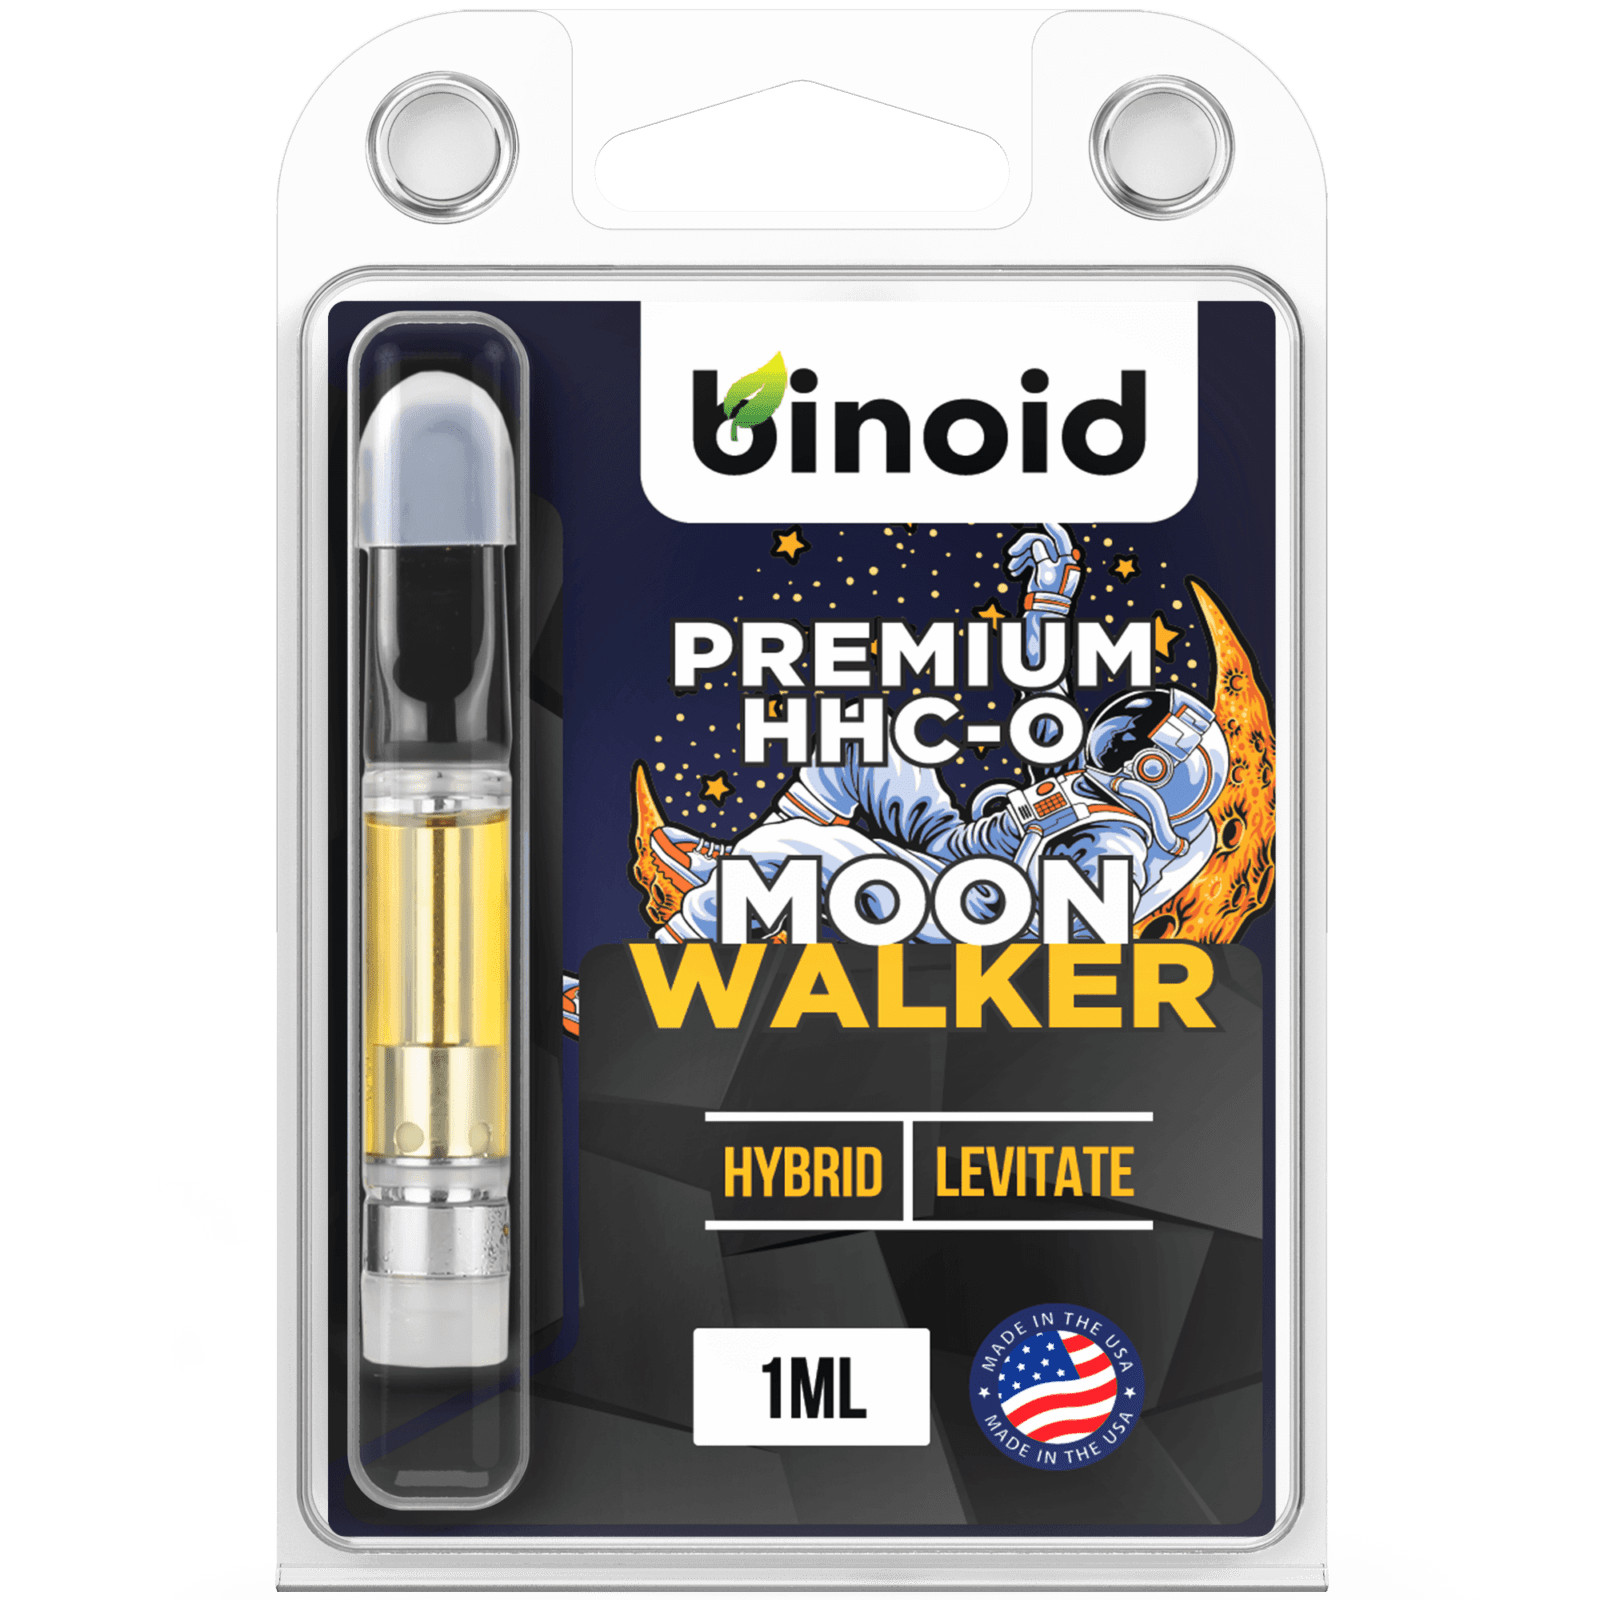 Binoid HHC-O Vape Cartridge – Moon Walker